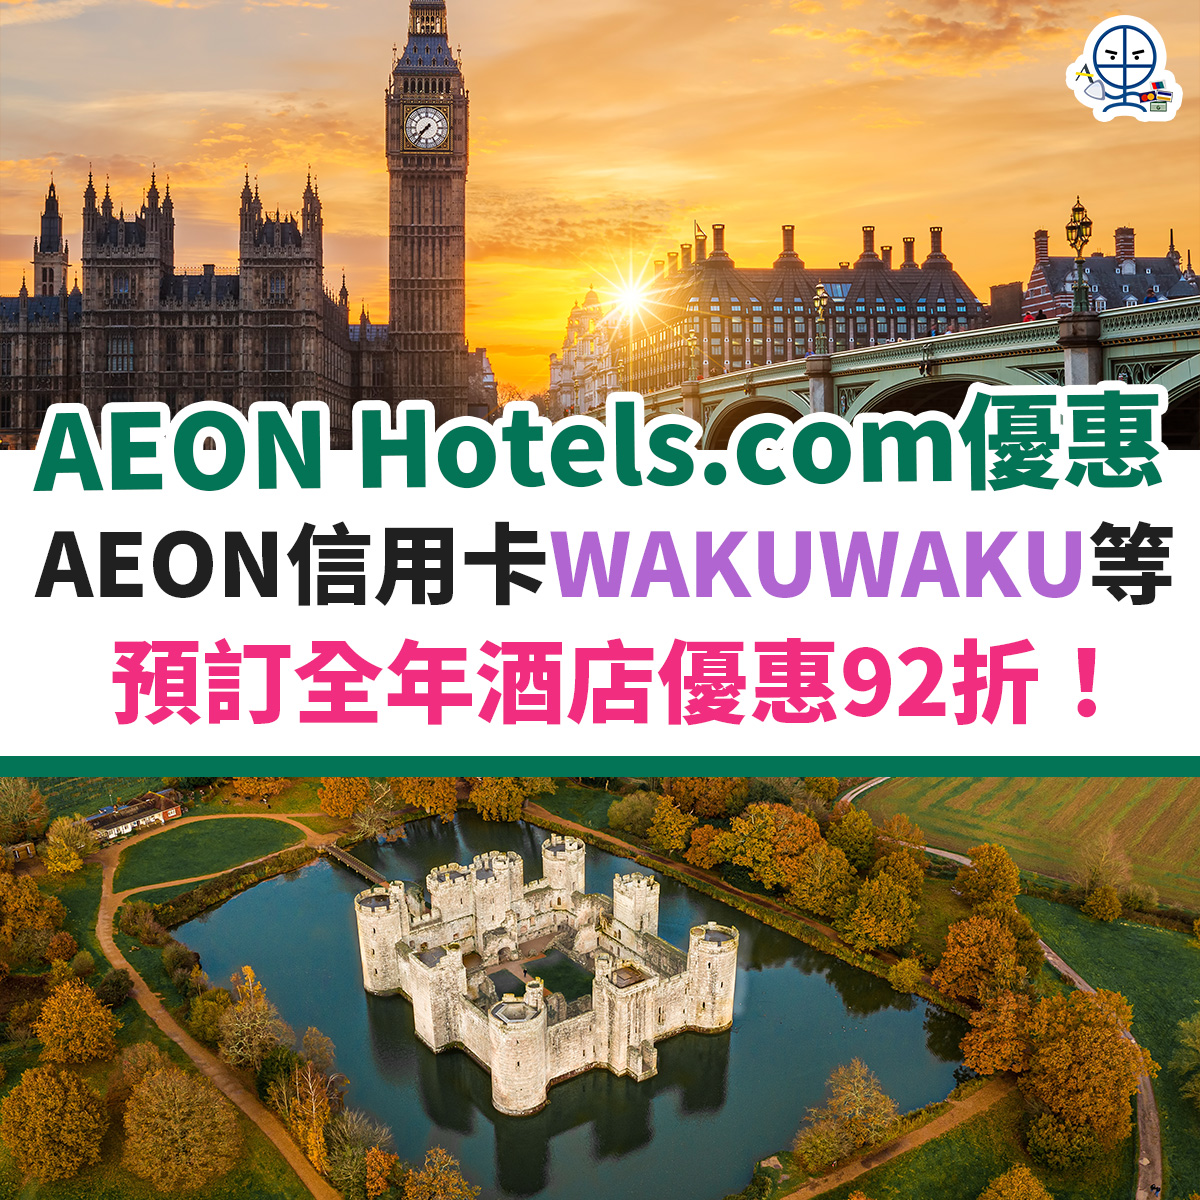 aeon-信用卡-wakuwaku-hotels-com-酒店-優惠-優惠碼